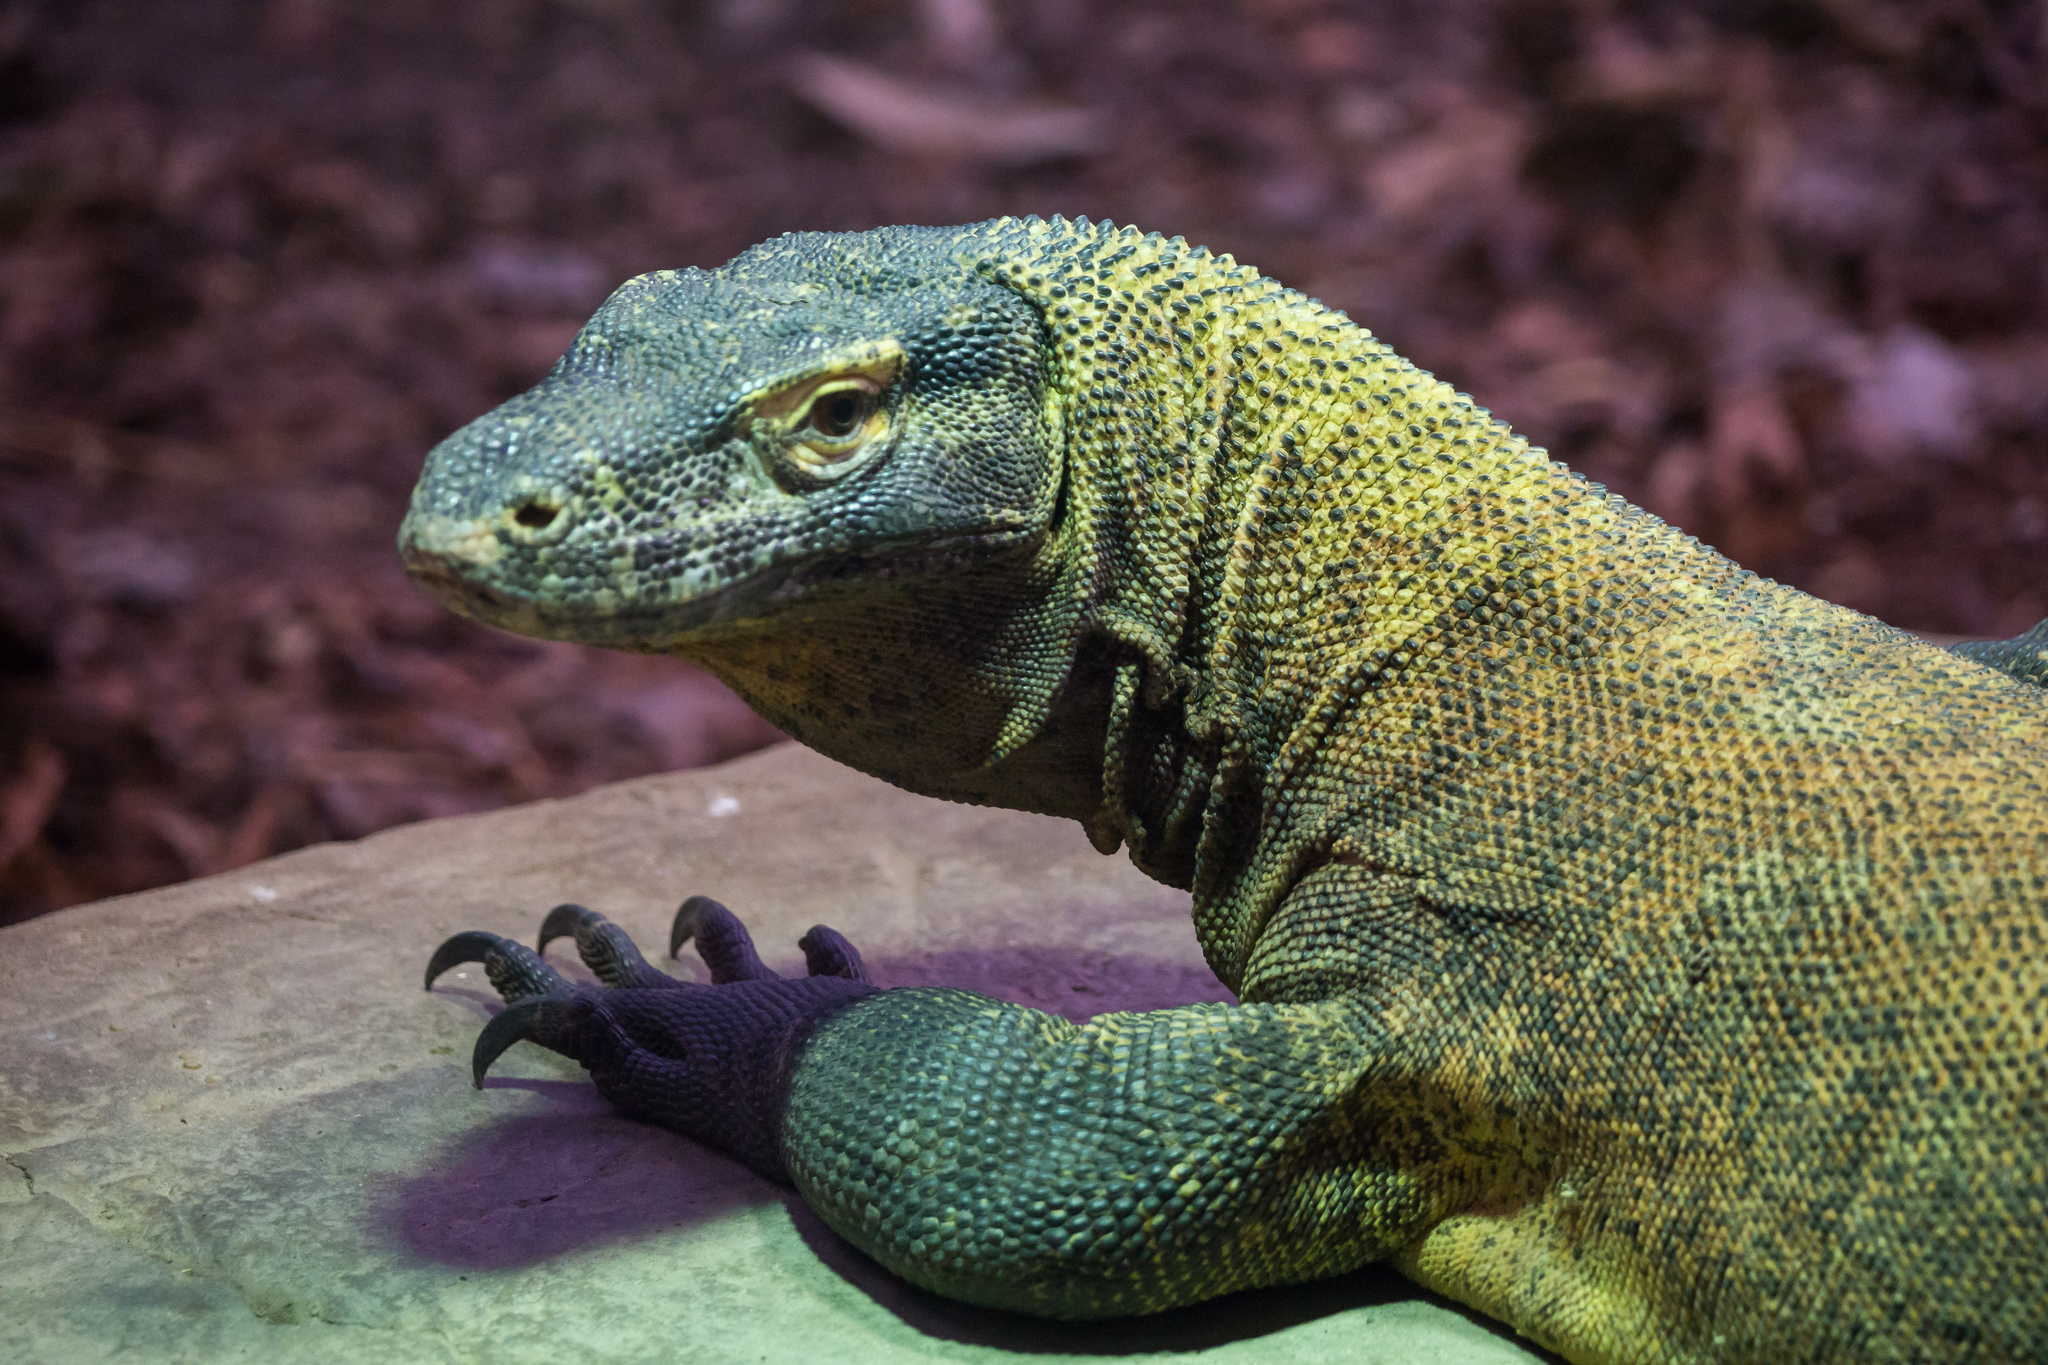 Le dragon de Komodo, un des plus grands sauriens actuels. © Rob Osborne, Flickr